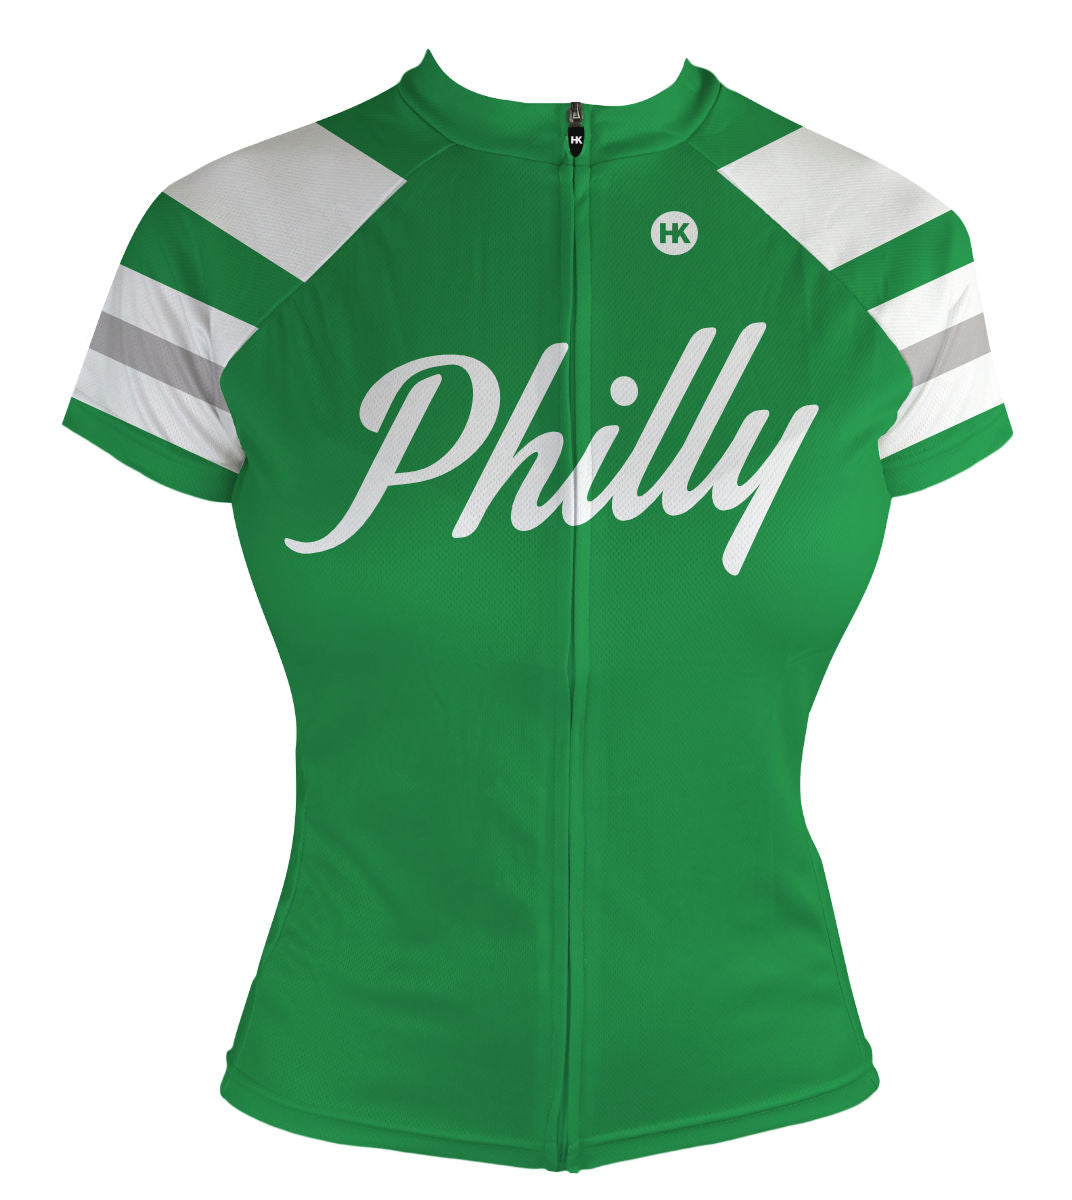 Philly Retro Green Women's